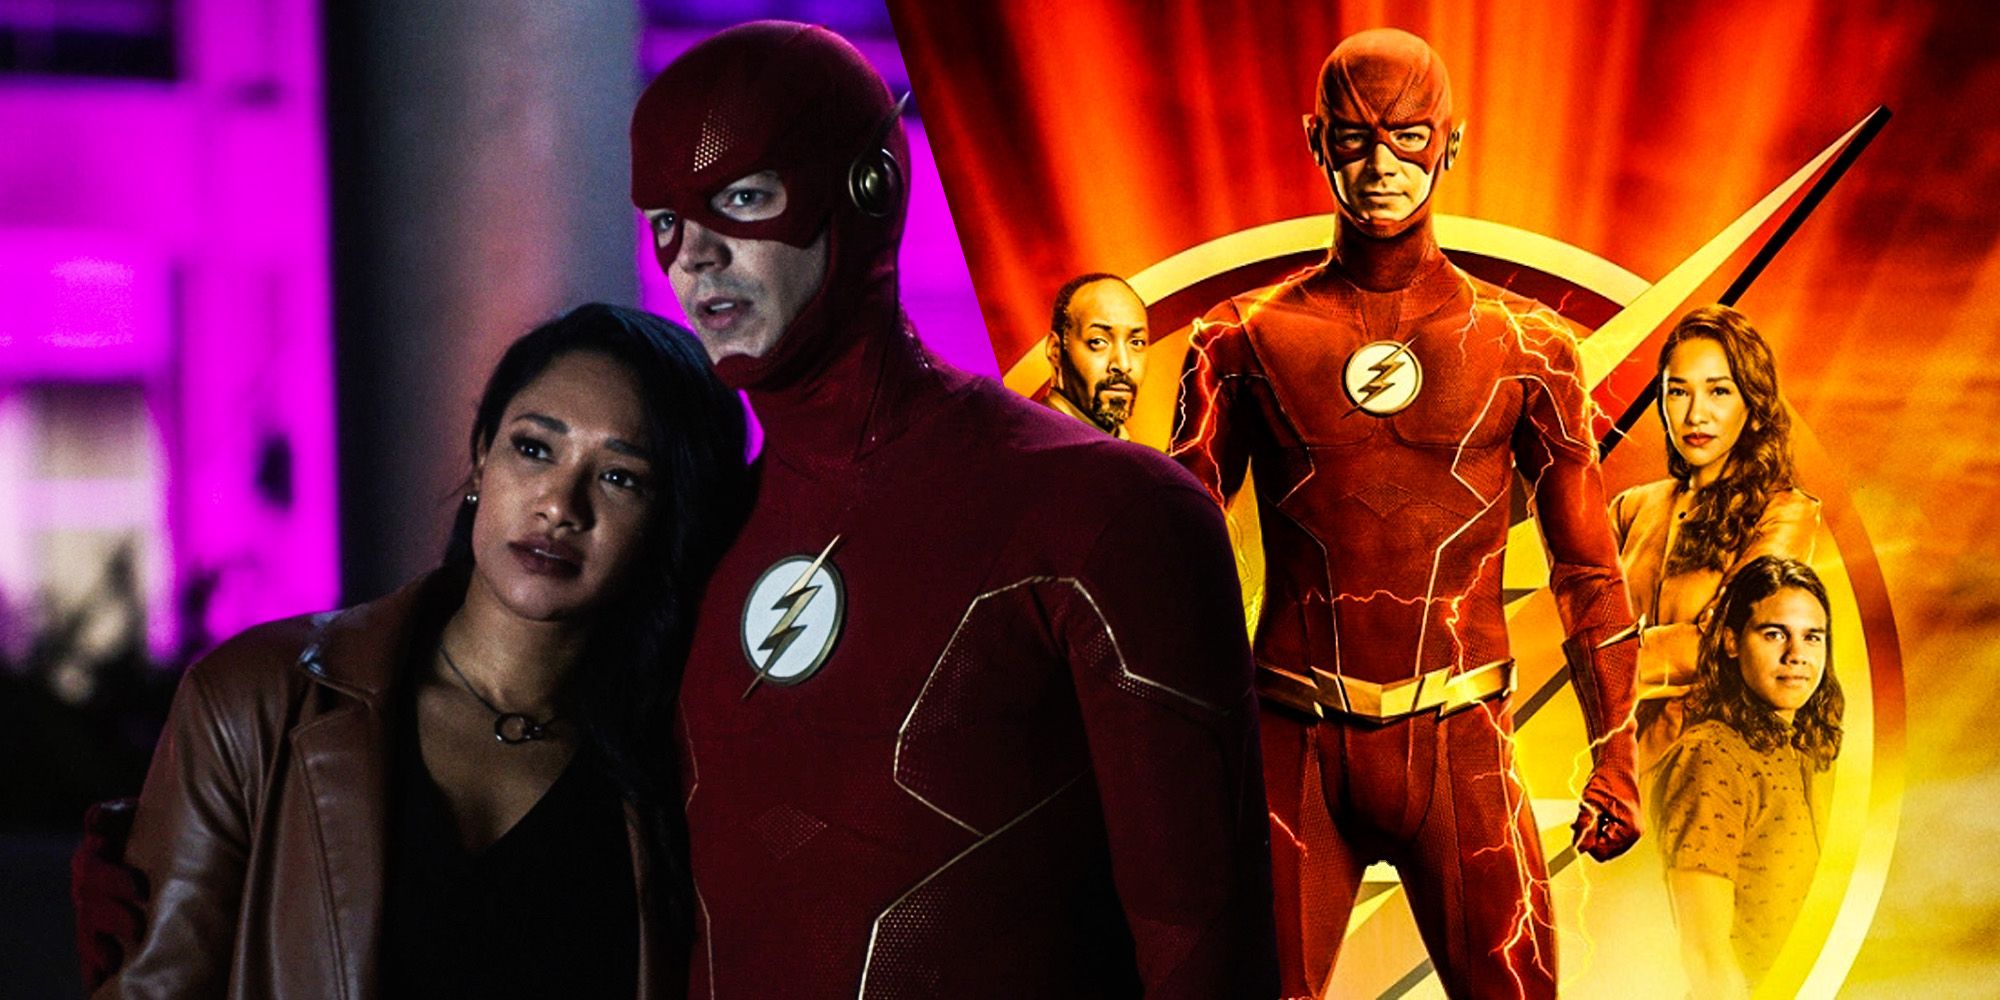 The Flash Season 7